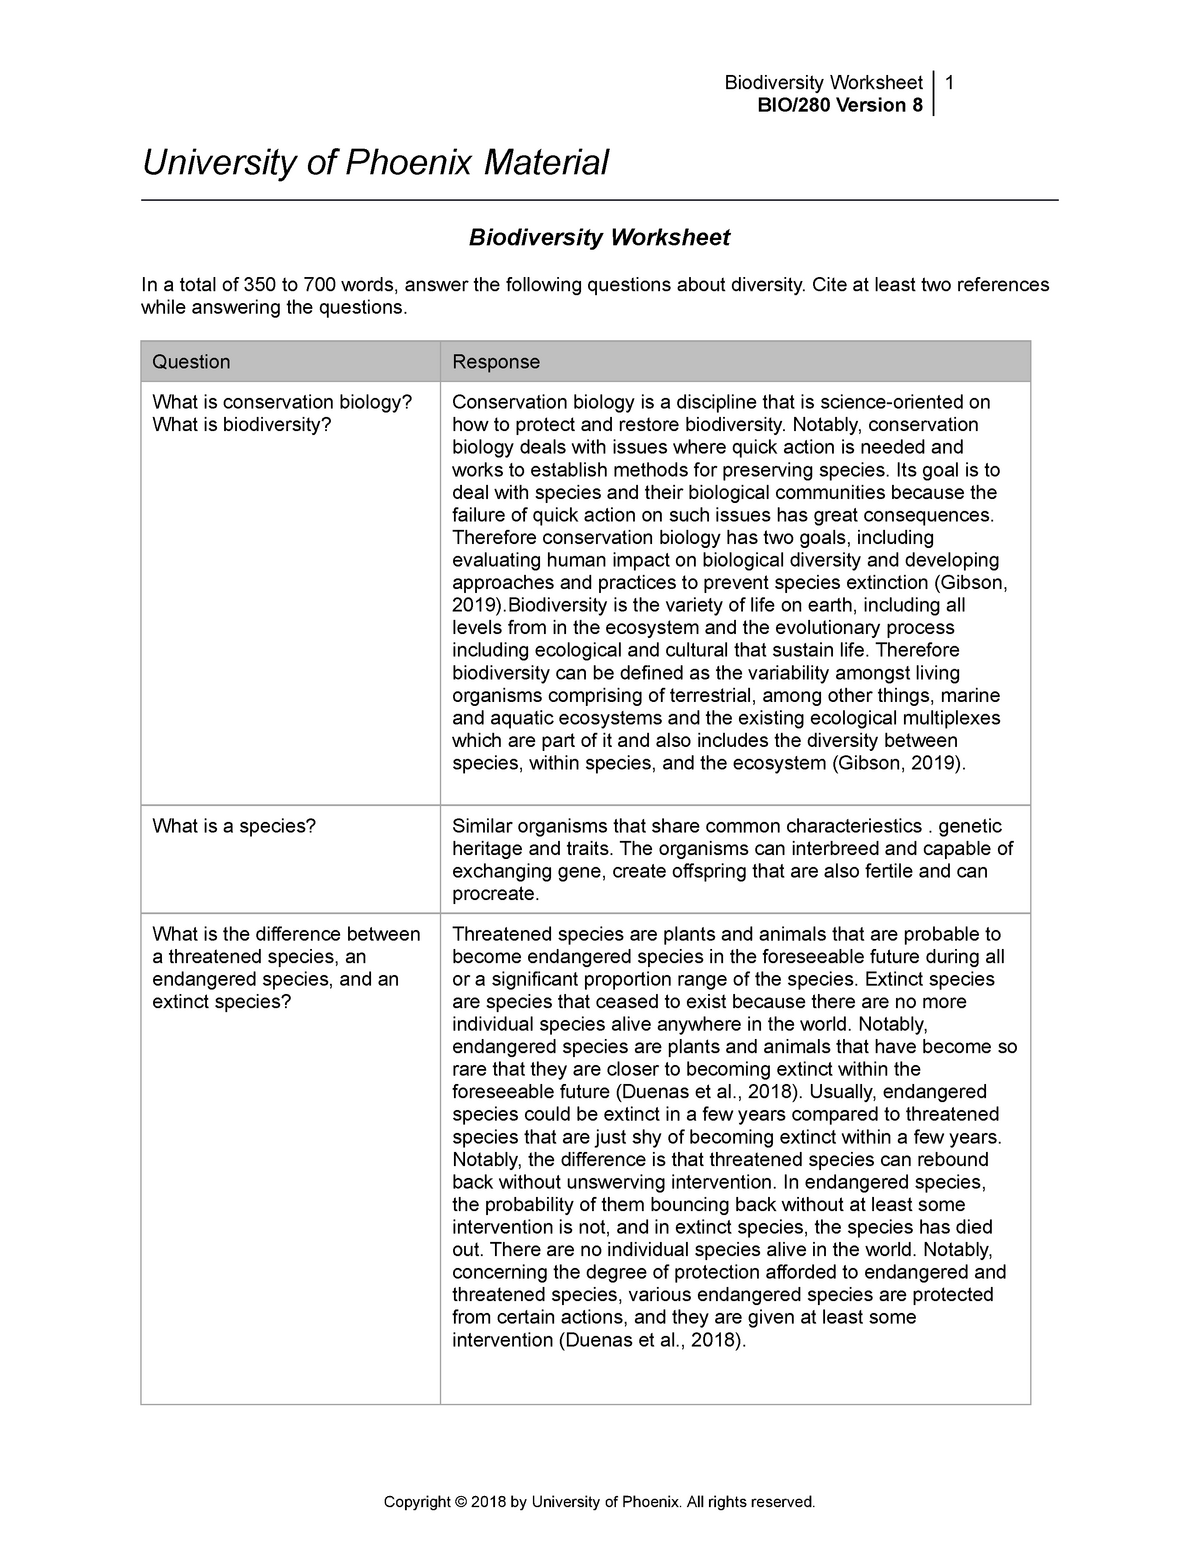 BIO21r21 Biodiversity Worksheet - BIO 21 - Microbiology - UOPX Intended For 6 3 Biodiversity Worksheet Answers